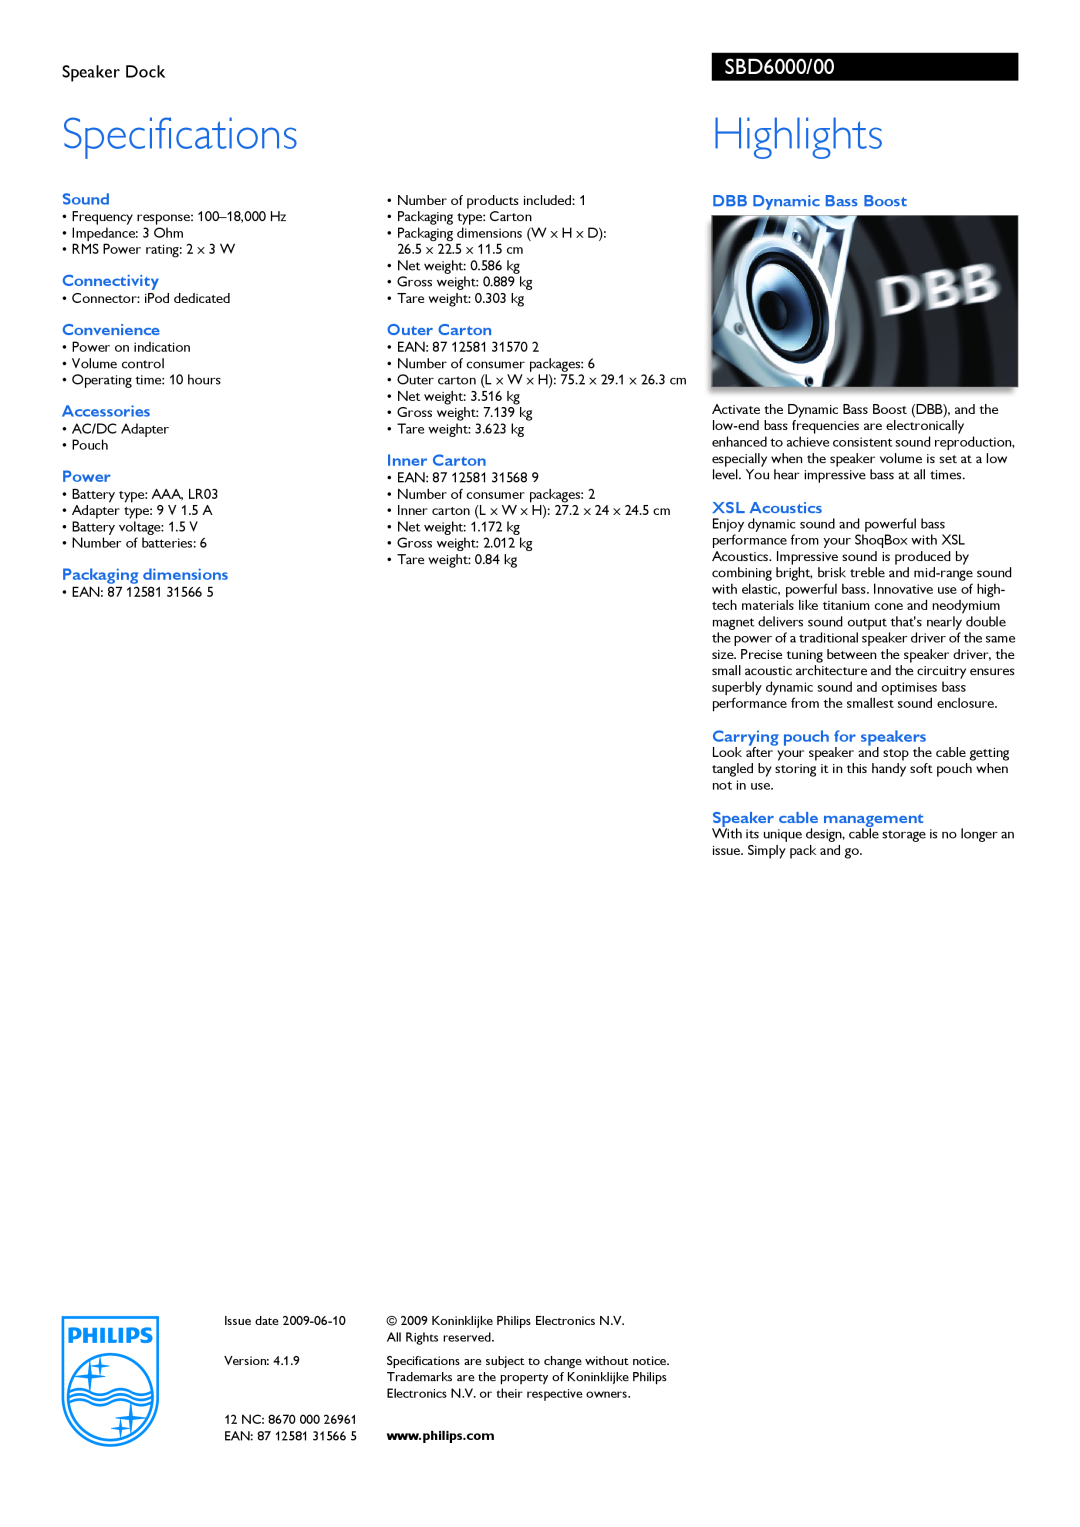 Philips manual SBD6000/00, Speaker Dock, SpecificationsHighlights 